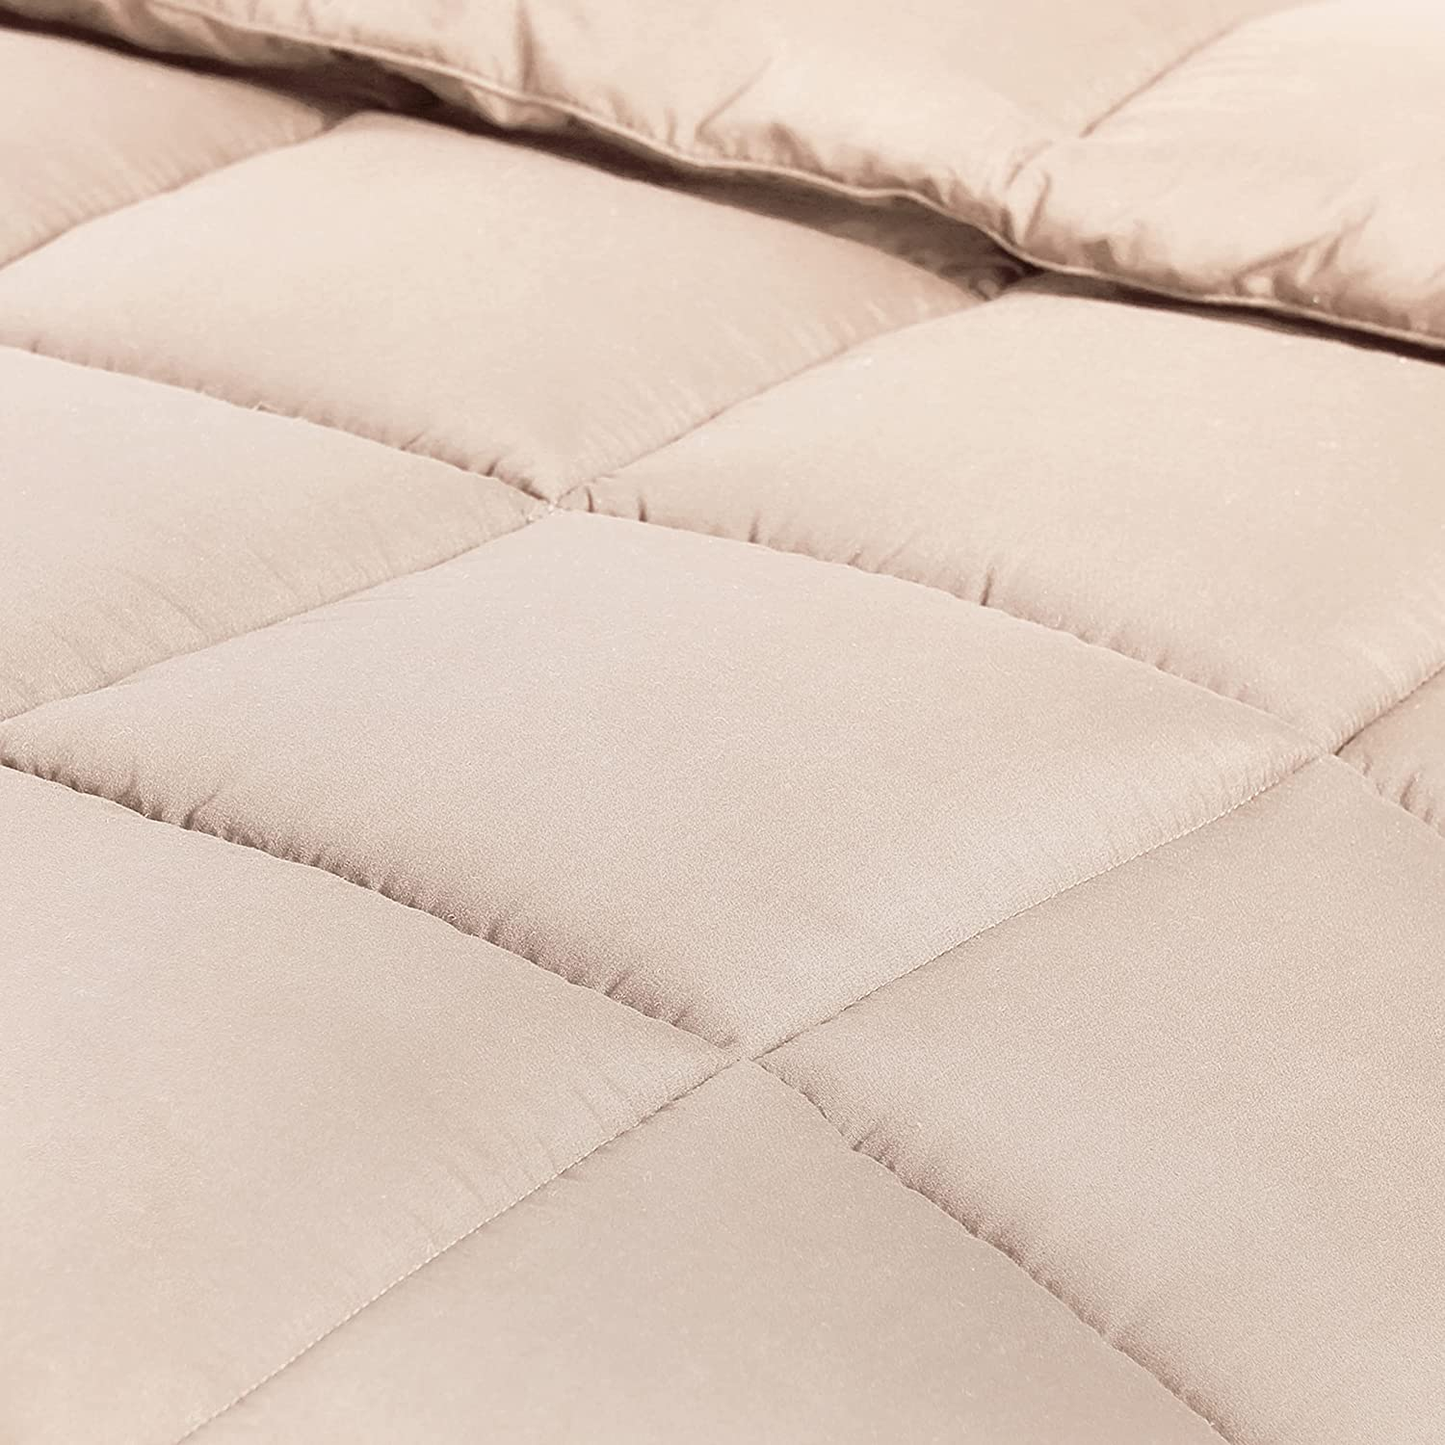  All Season 250 GSM Comforter - Soft down Alternative Comforter - Plush Siliconized Fiberfill Duvet Insert - Box Stitched (King/Cal King, Beige)